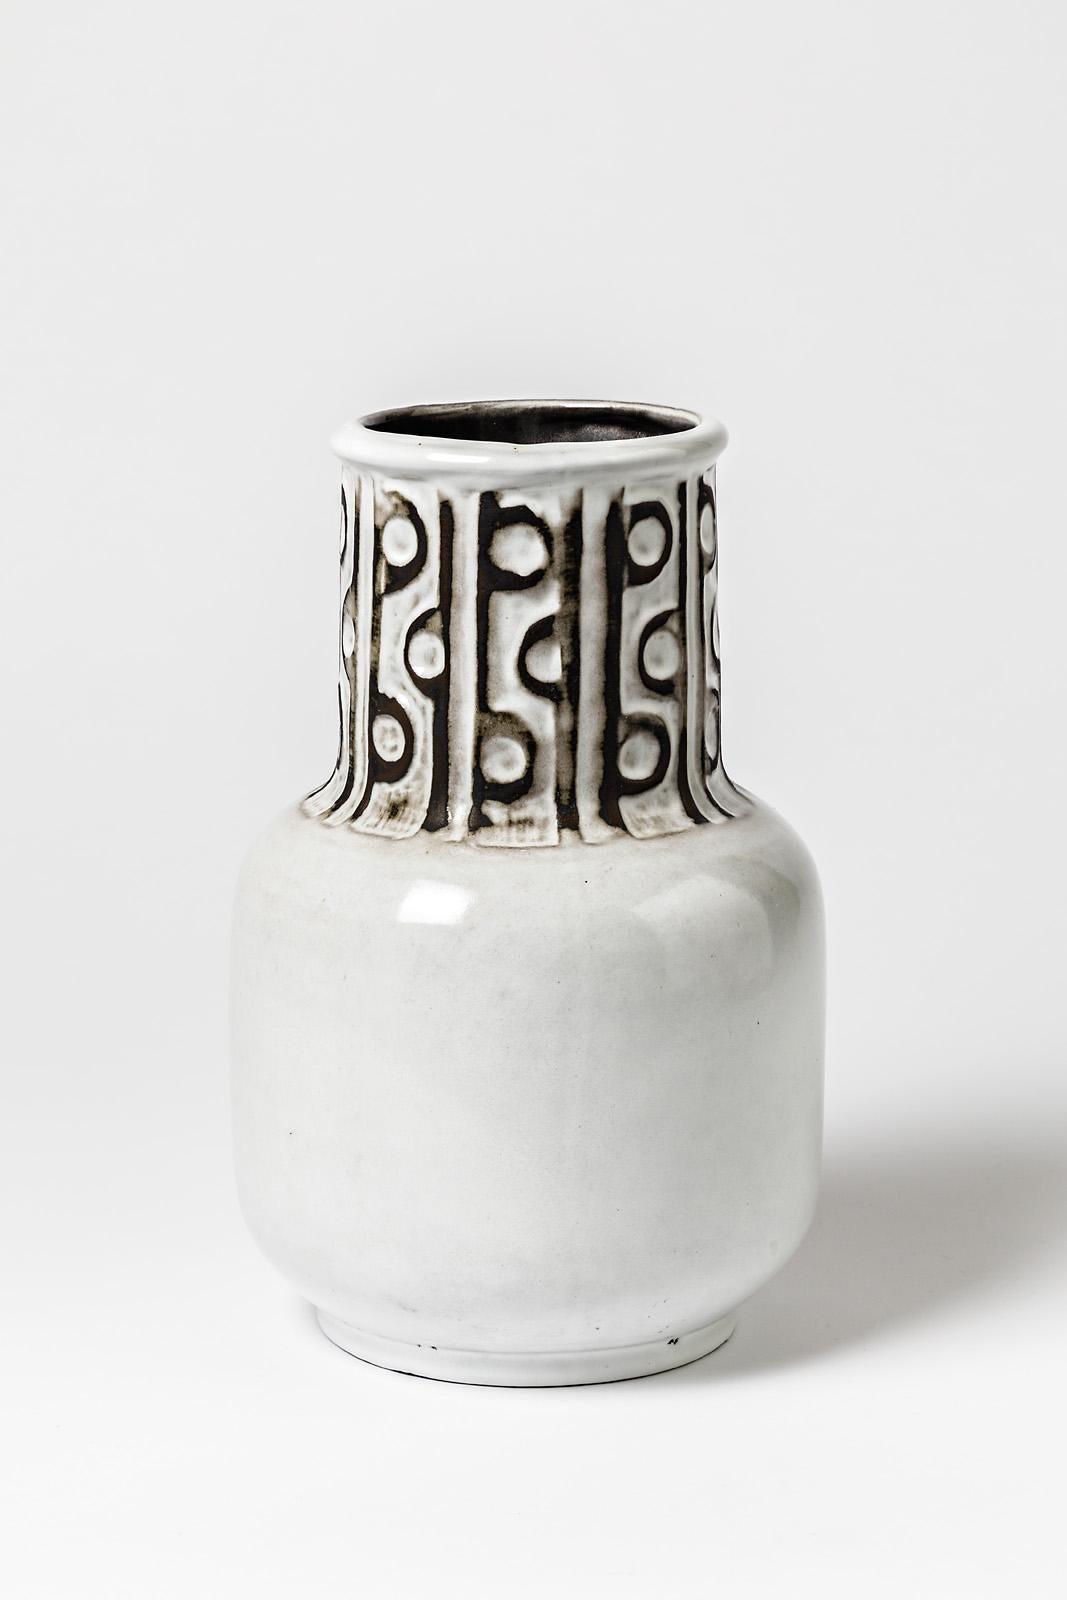 French Ceramic Vase with Black and White Glazes Decoration, Signed Polaris, 1970 For Sale